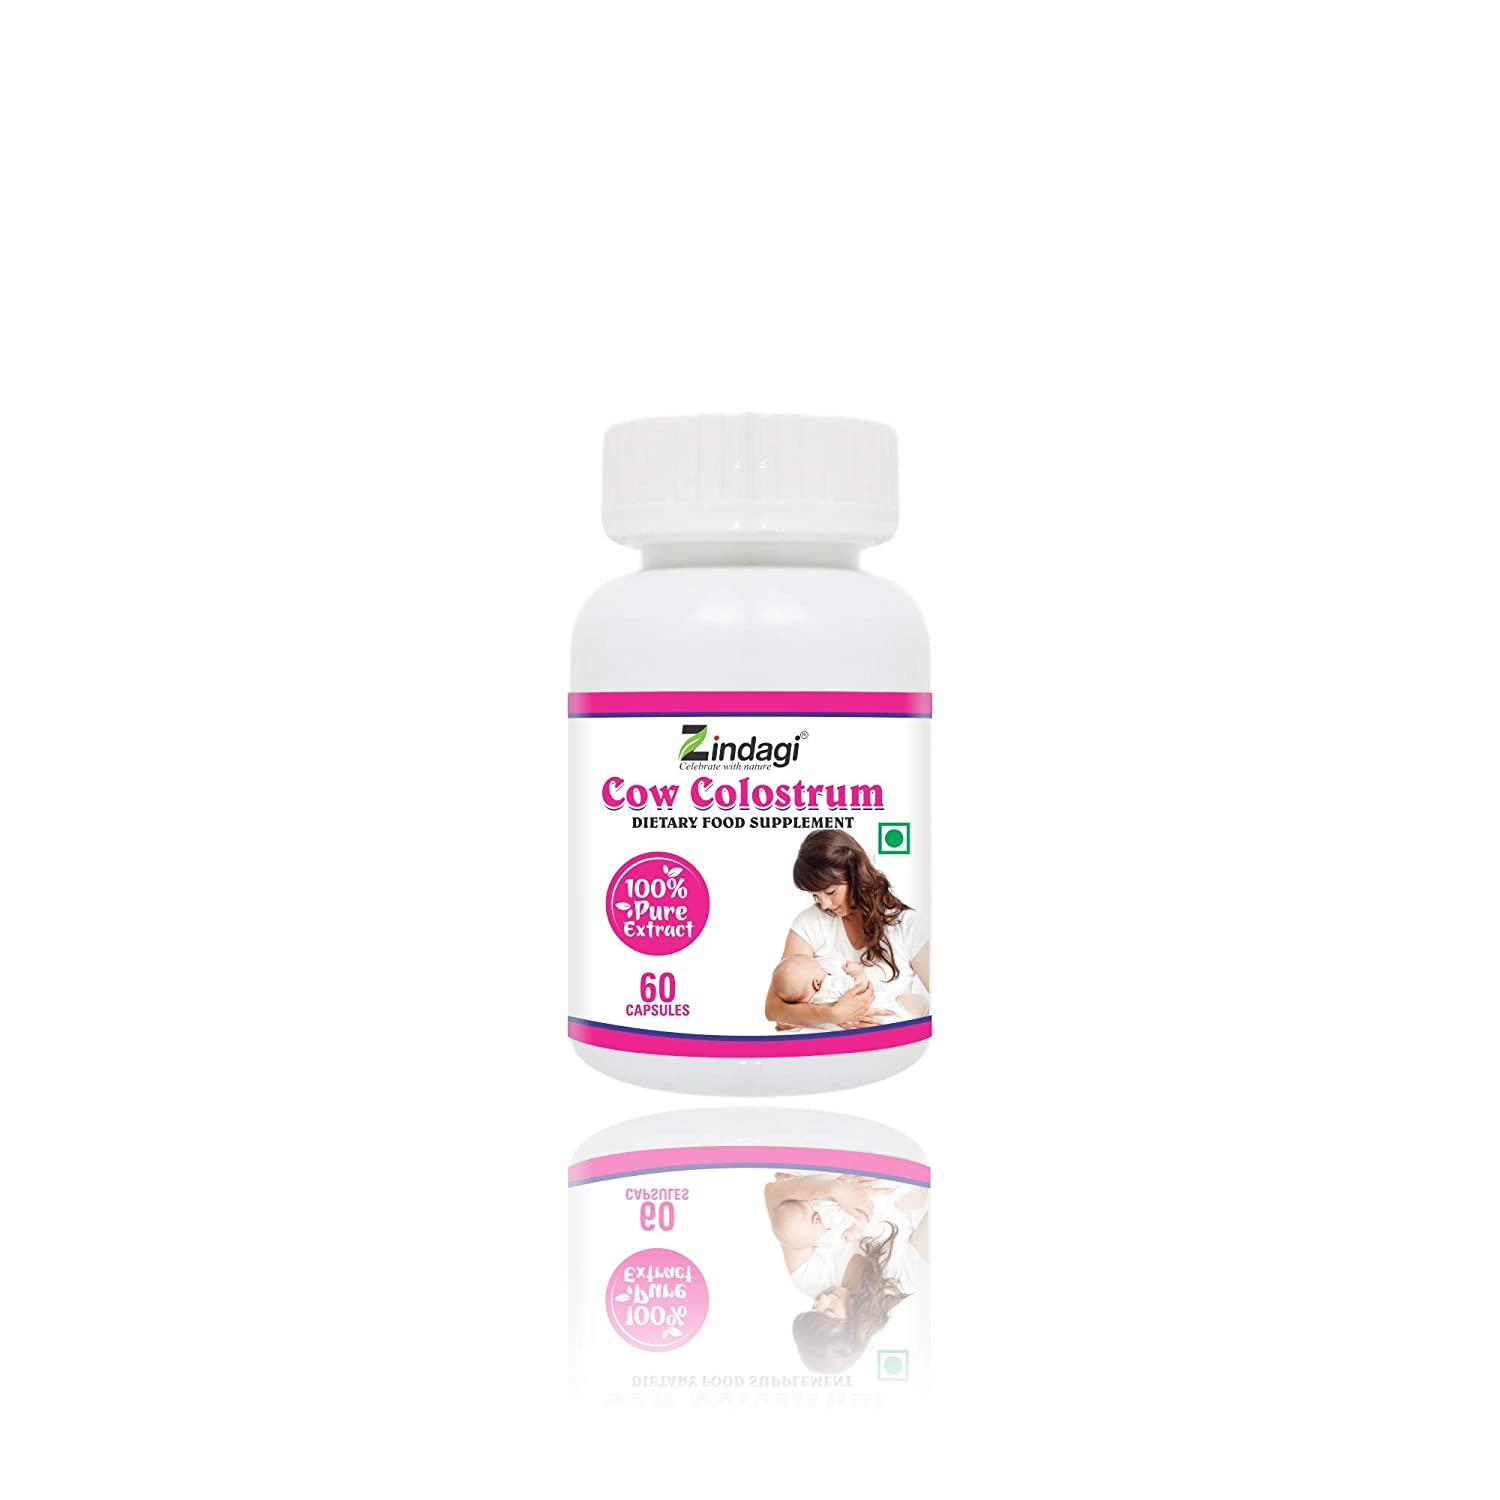 Zindagi Cow Colostrum Capsules - Dietary Food Supplement - 100% Natural & Pure Cow Colostrum Extract (60 Capsules)